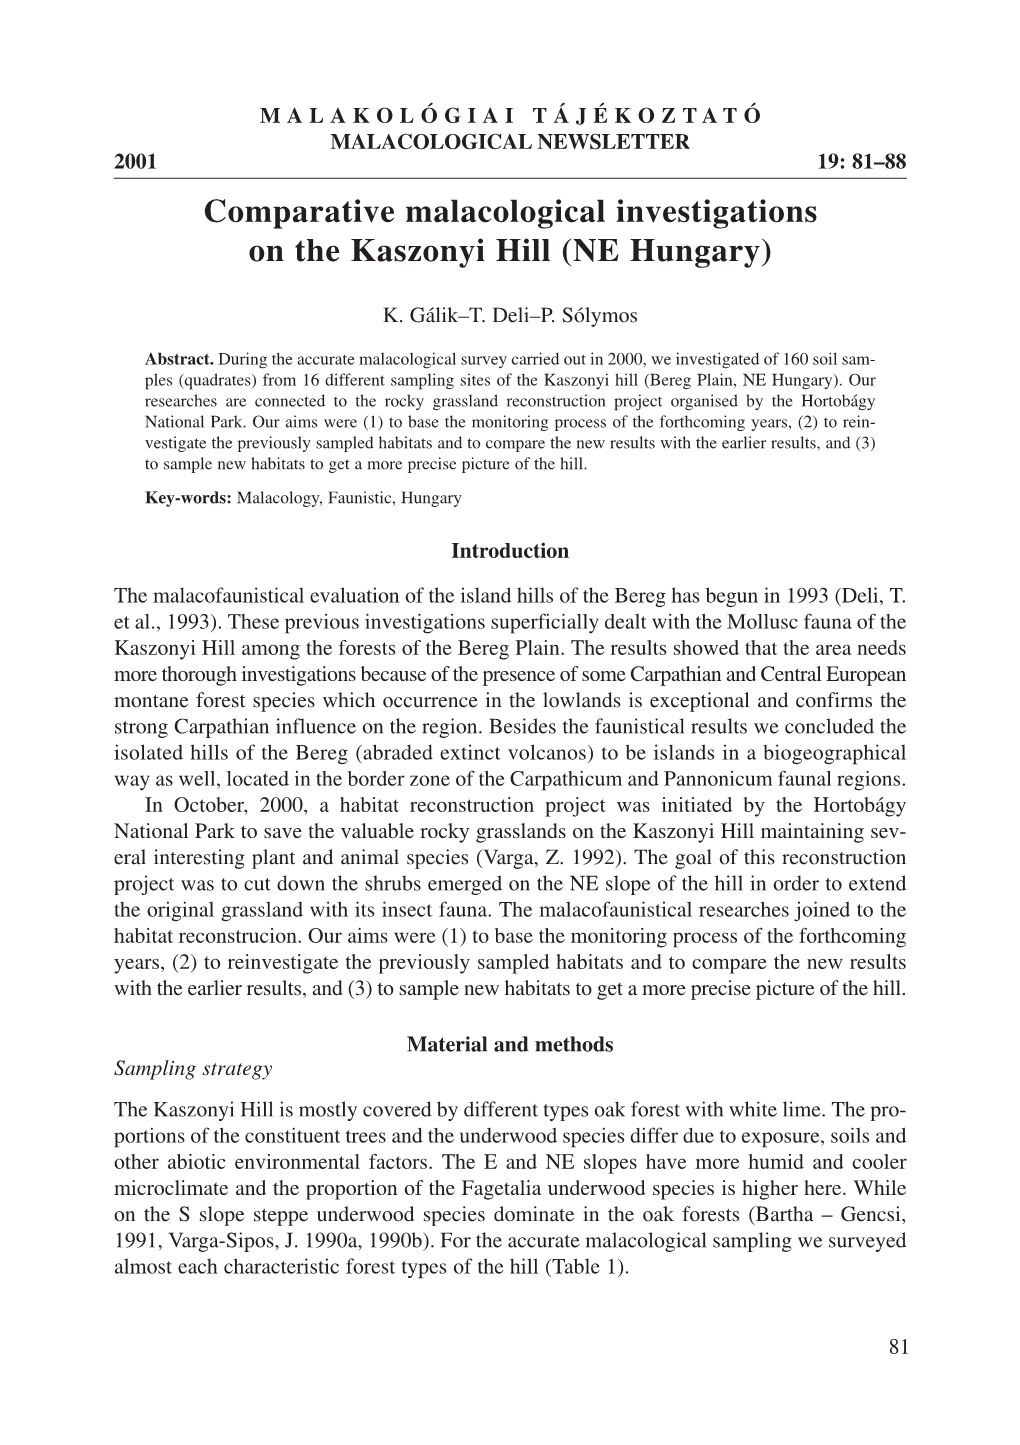 Comparative Malacological Investigations on the Kaszonyi Hill (NE Hungary)